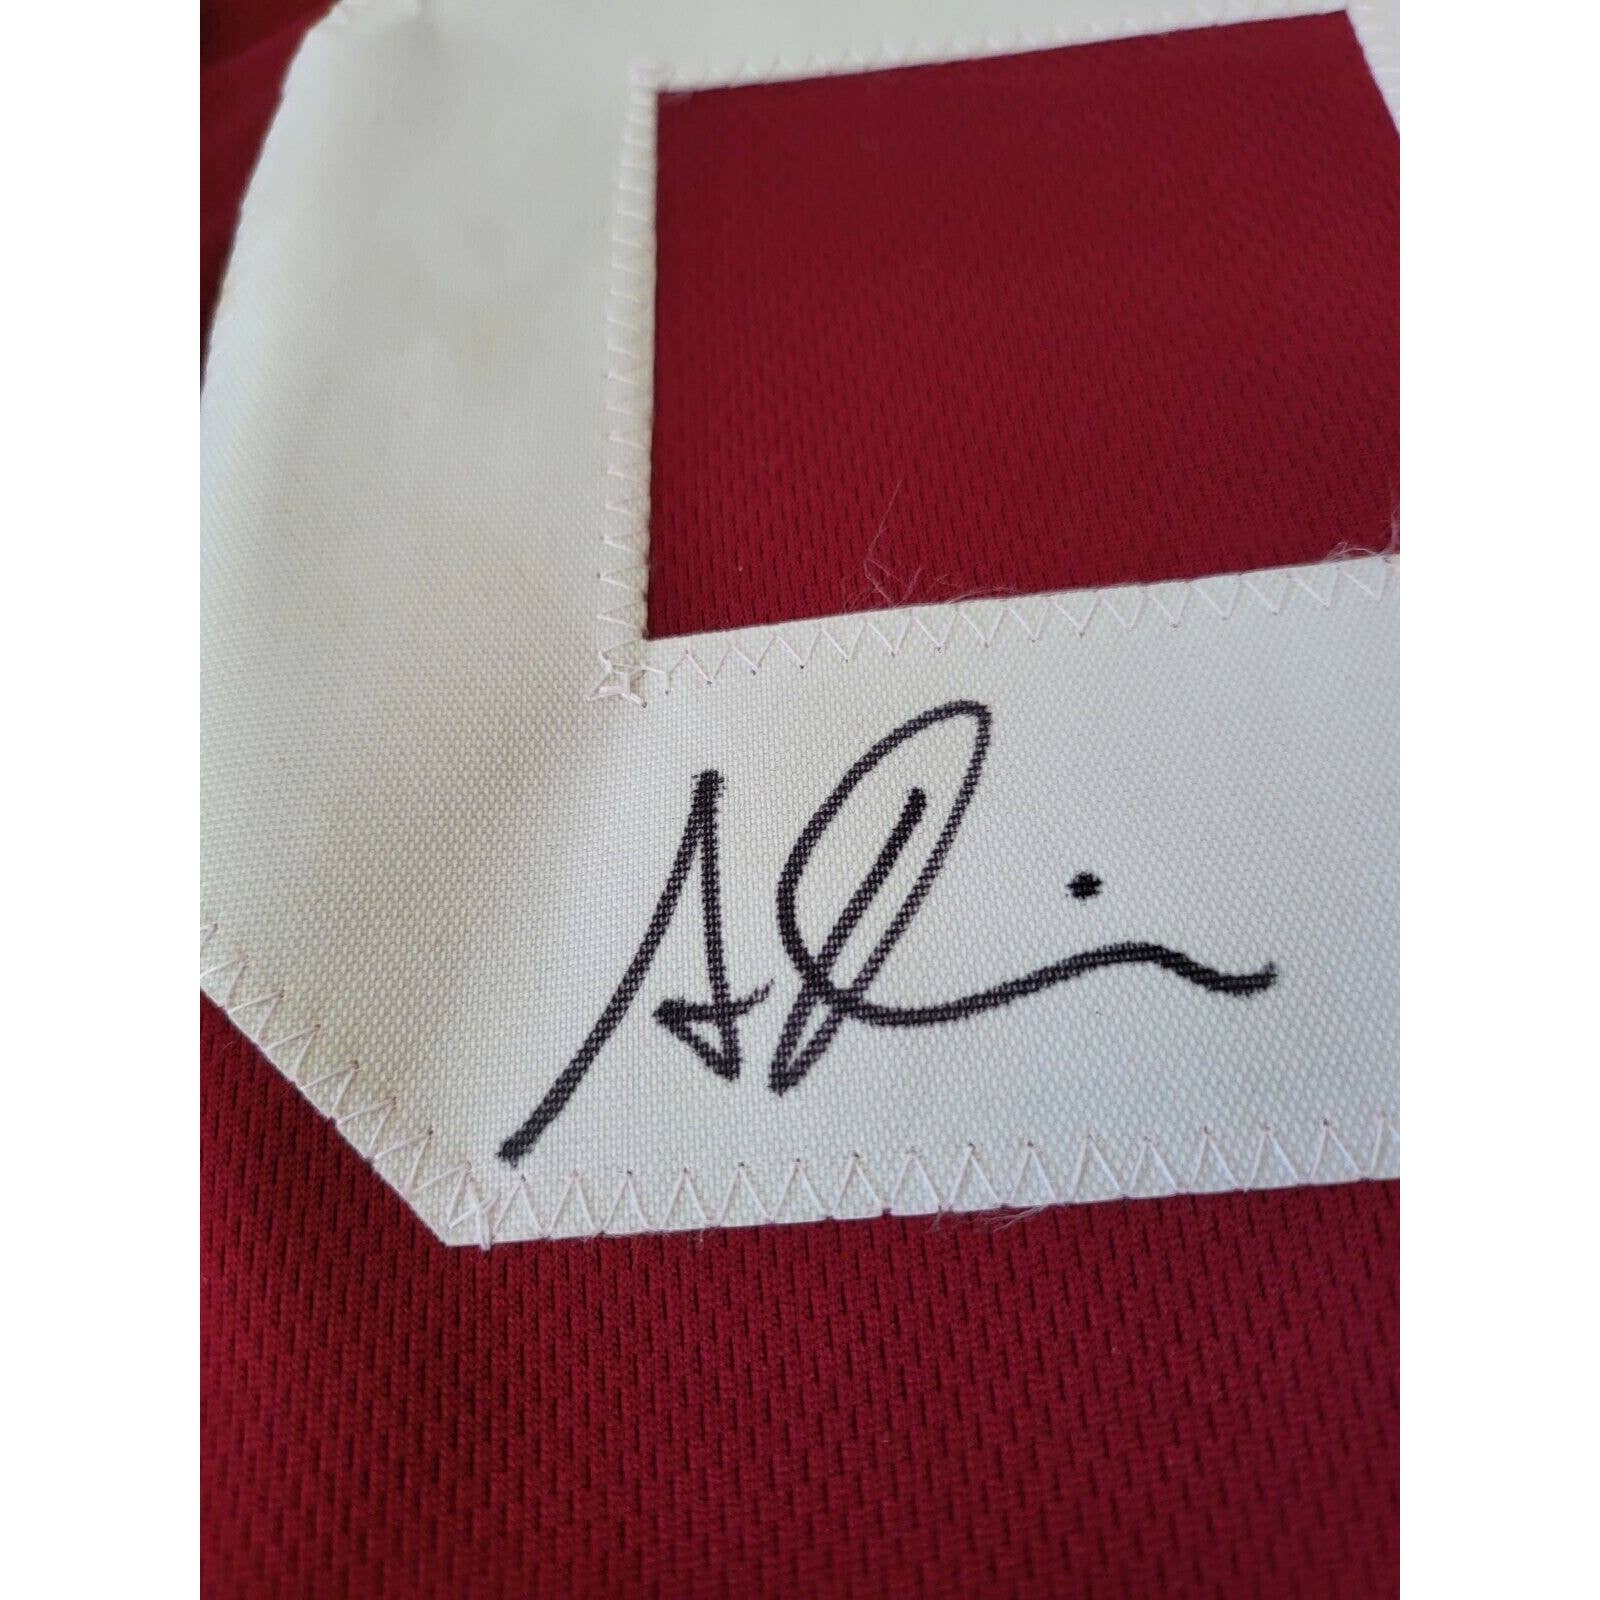 Simeon Rice Autographed/Signed Jersey Beckett Sticker Arizona Cardinals - TreasuresEvolved